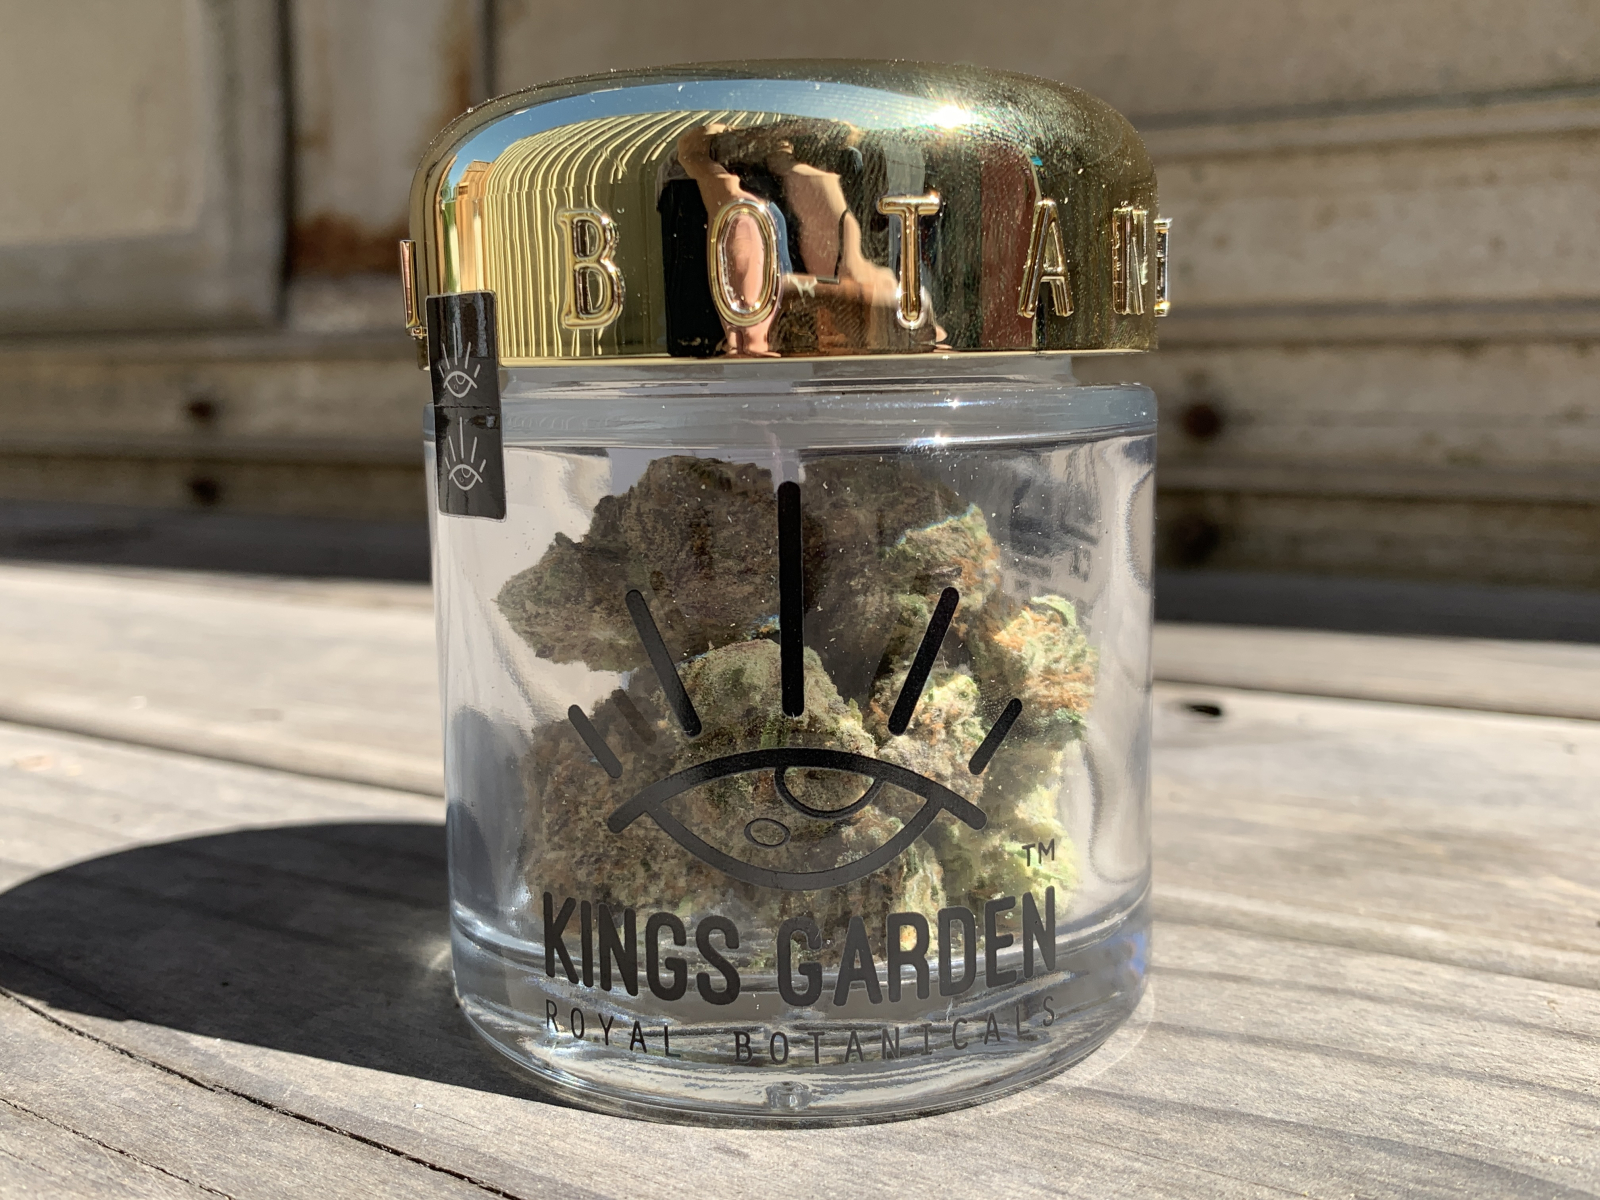 Kings Garden Pie Hoe #5 packaged quarter